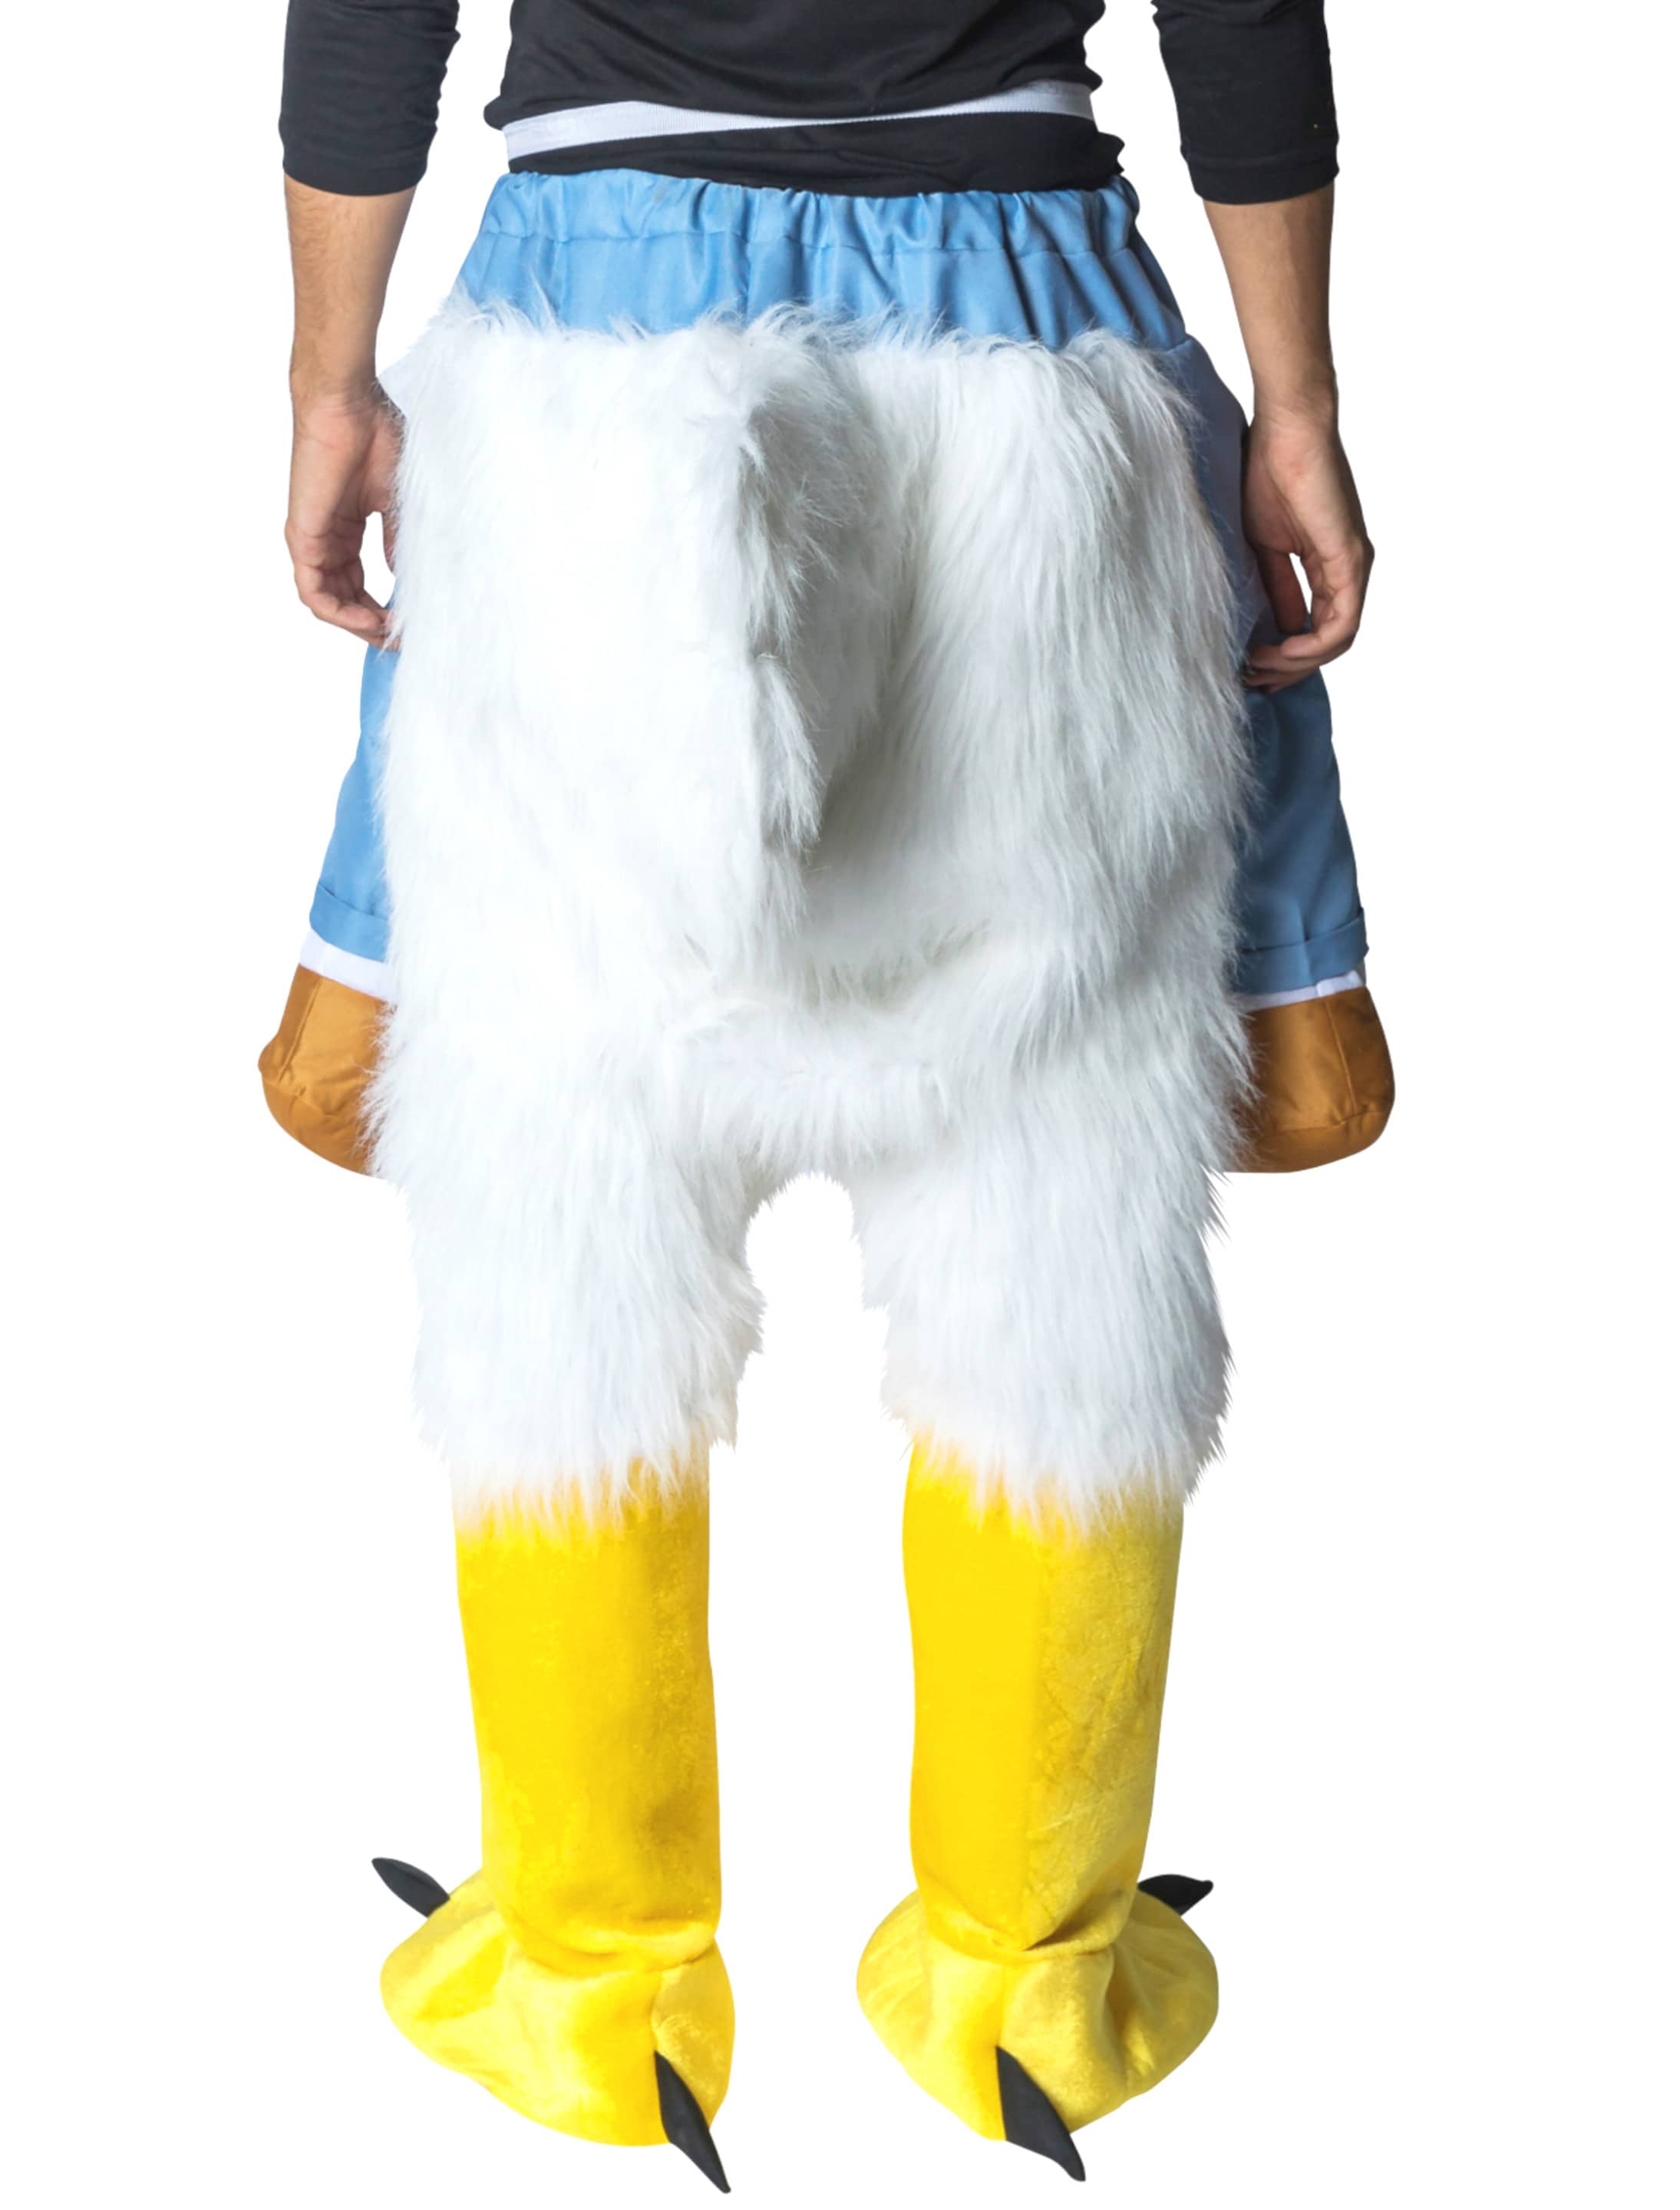 Huckepack Kostüm Huhn mehrfarbig